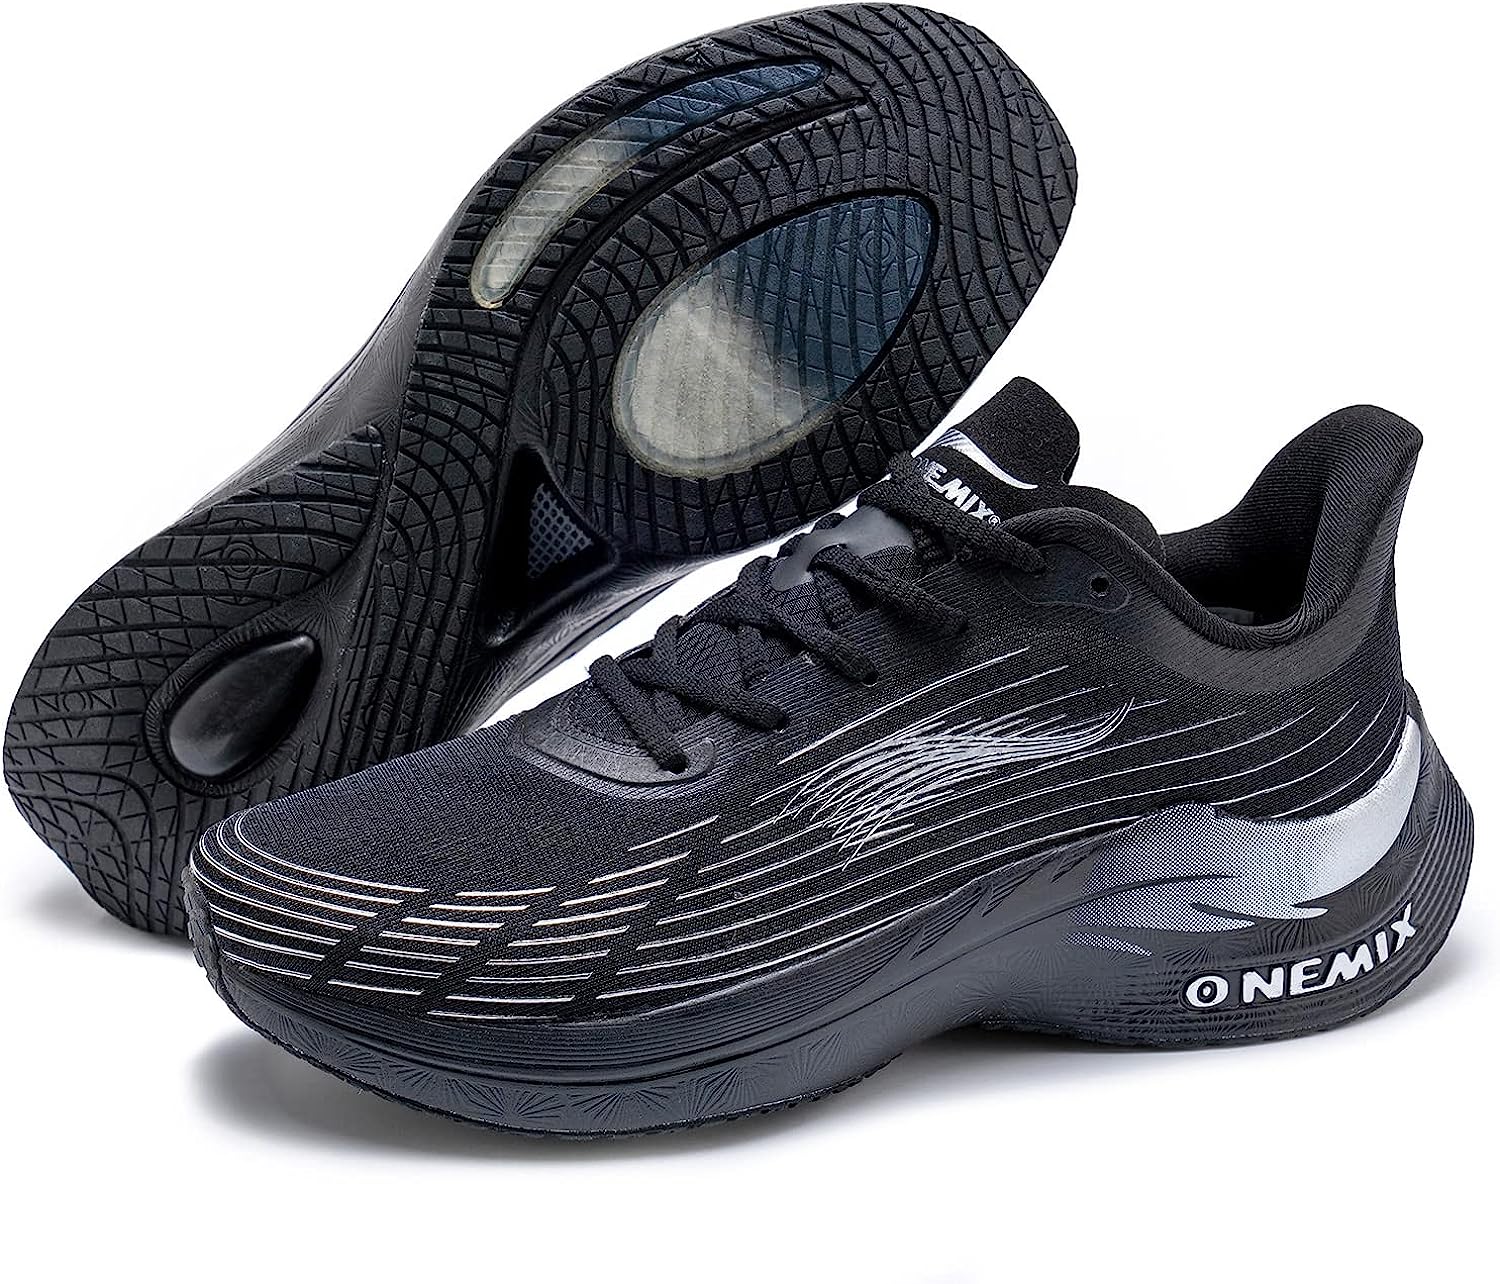 ONEMIX Mens Marathon Running Racing Shoe Lightweight [...]